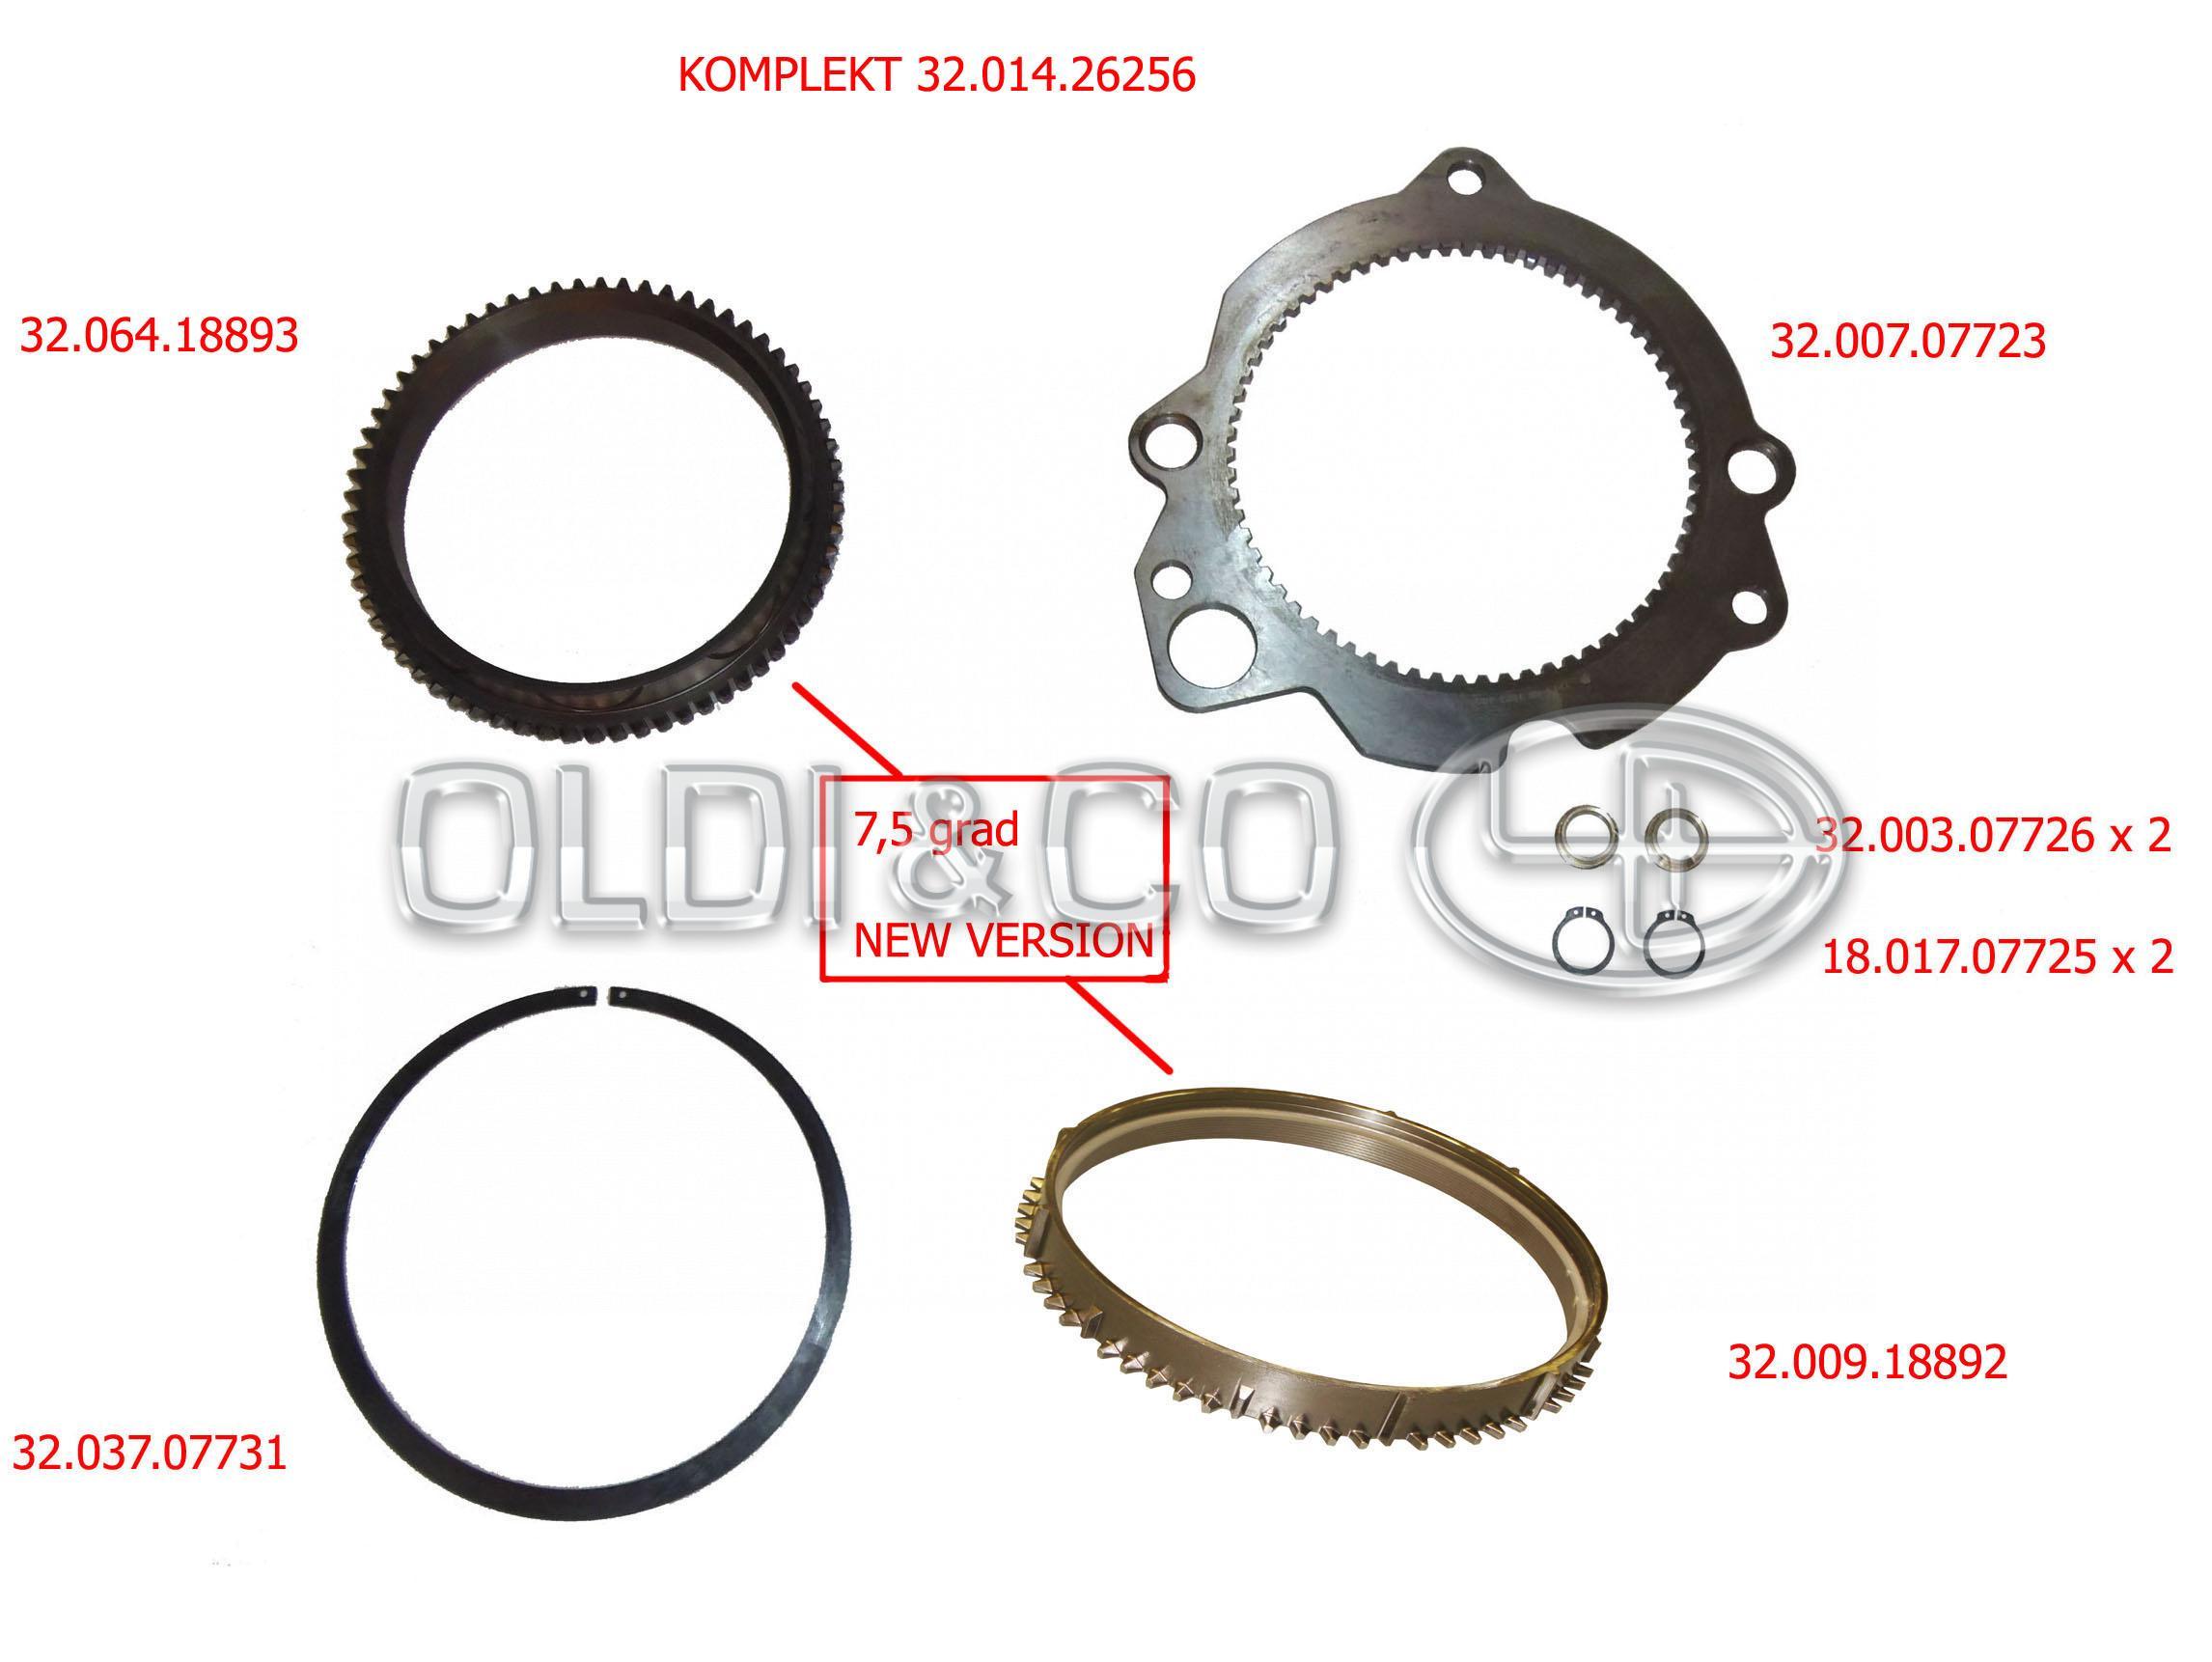 32.014.26256 Autofurniture → Gearbox gear kit